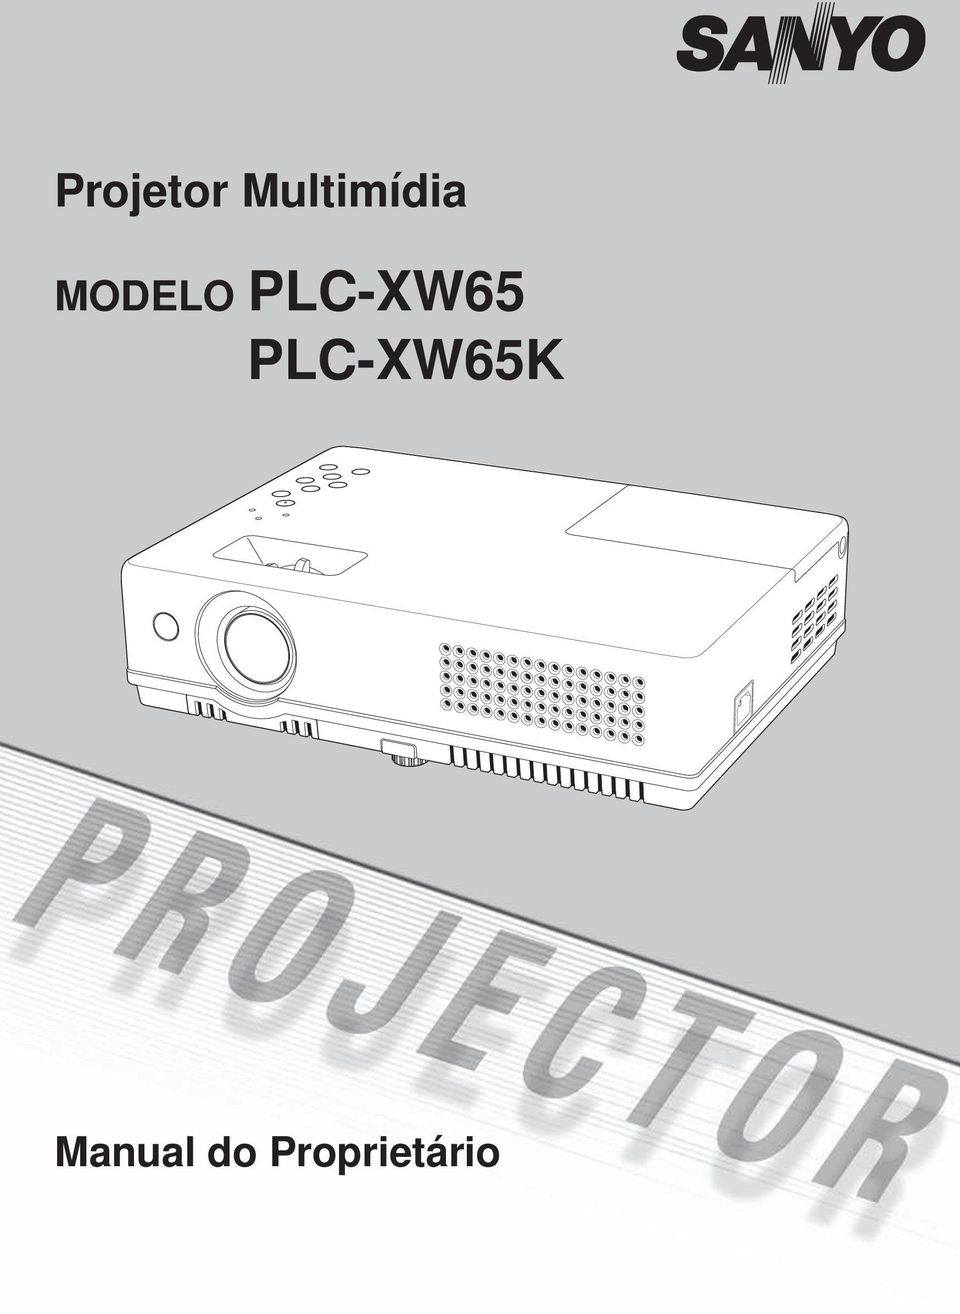 MODELO PLC-XW65